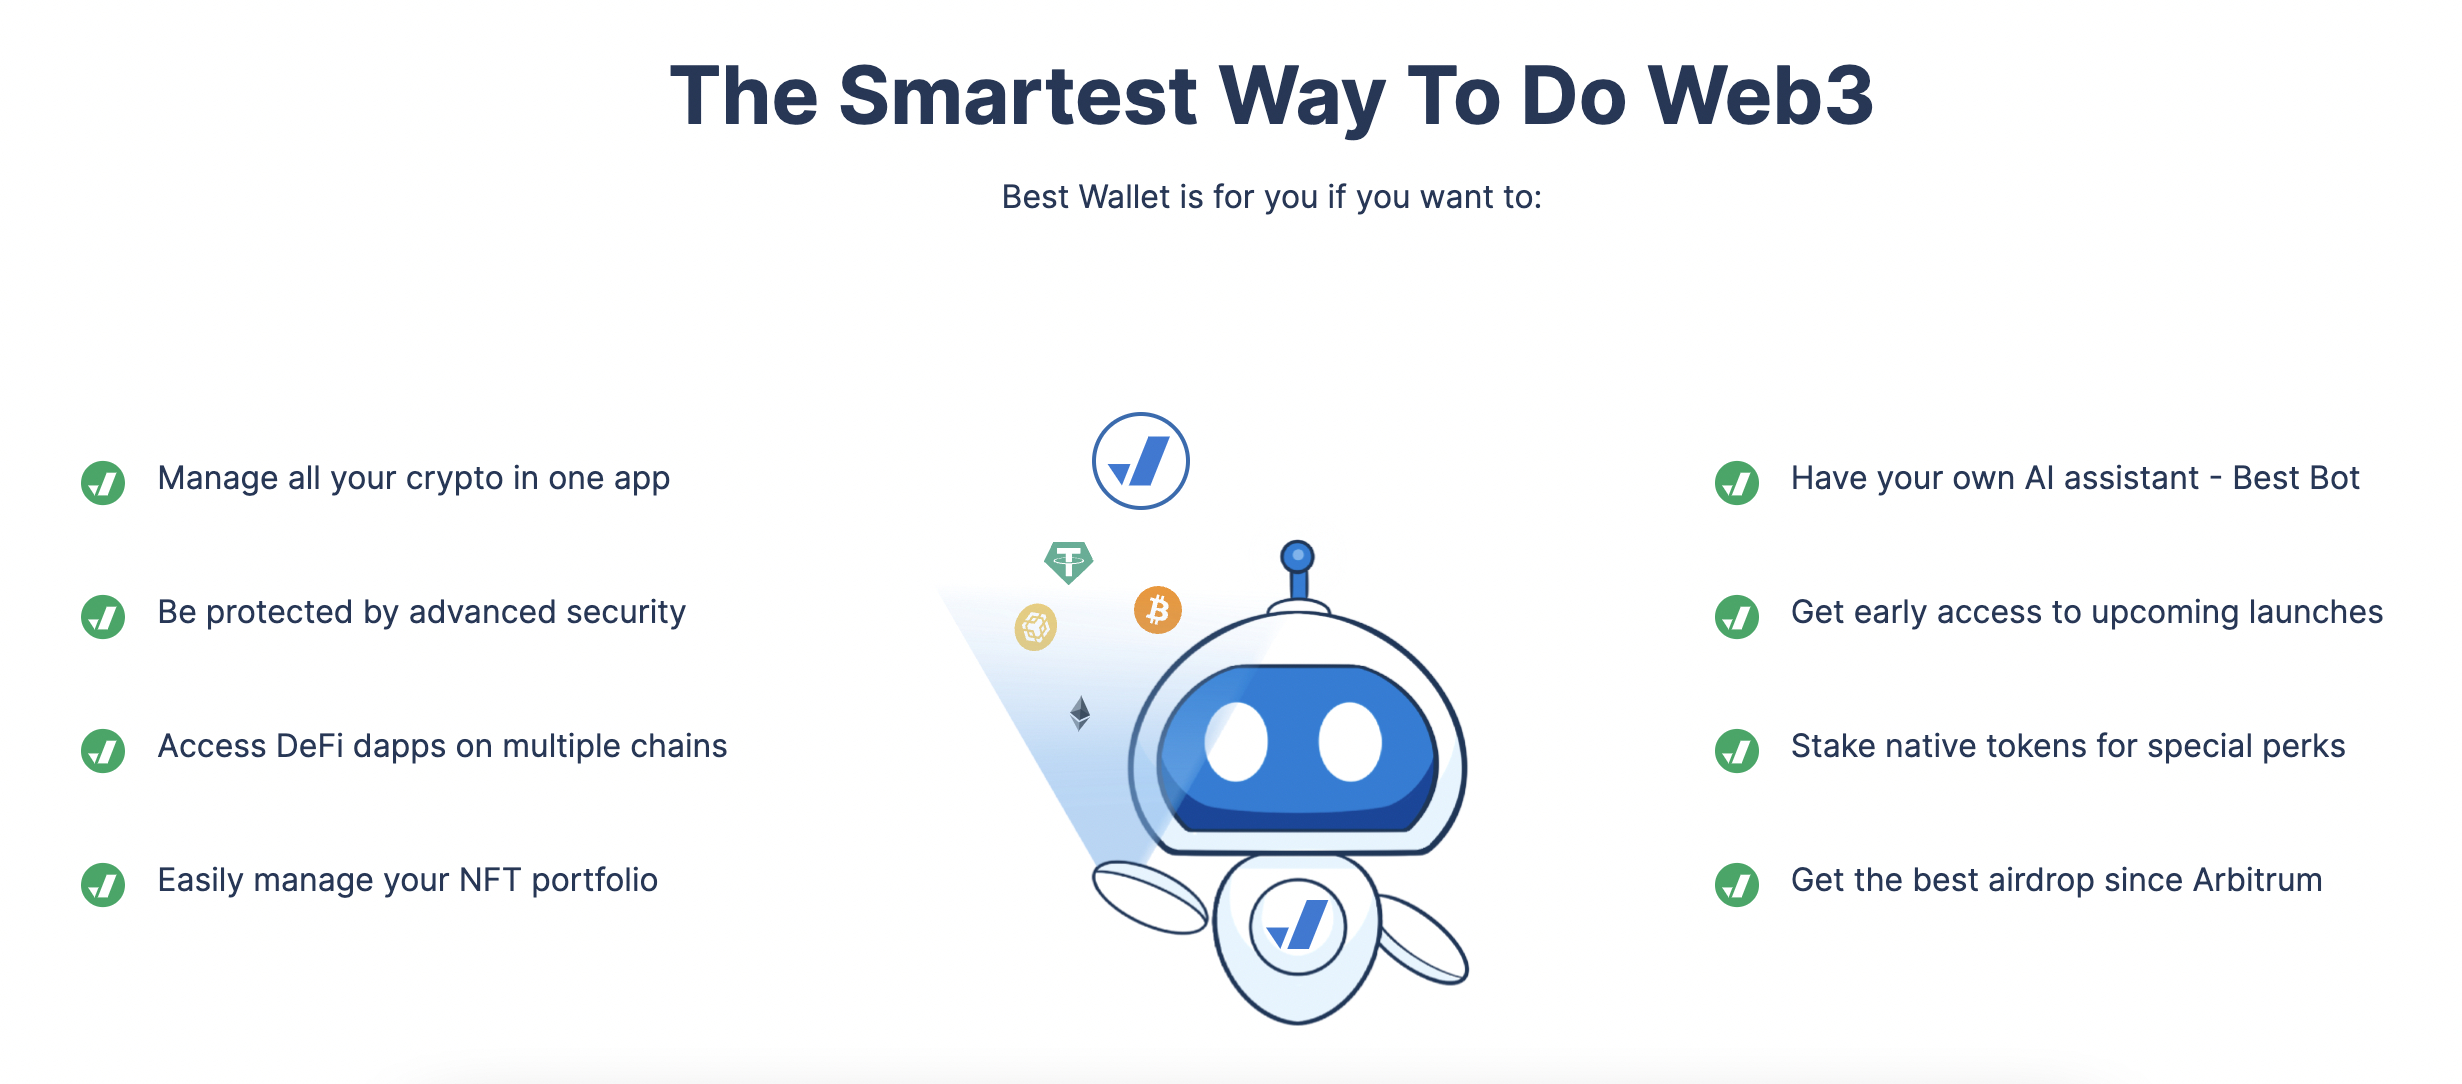 Best Wallet web3 features